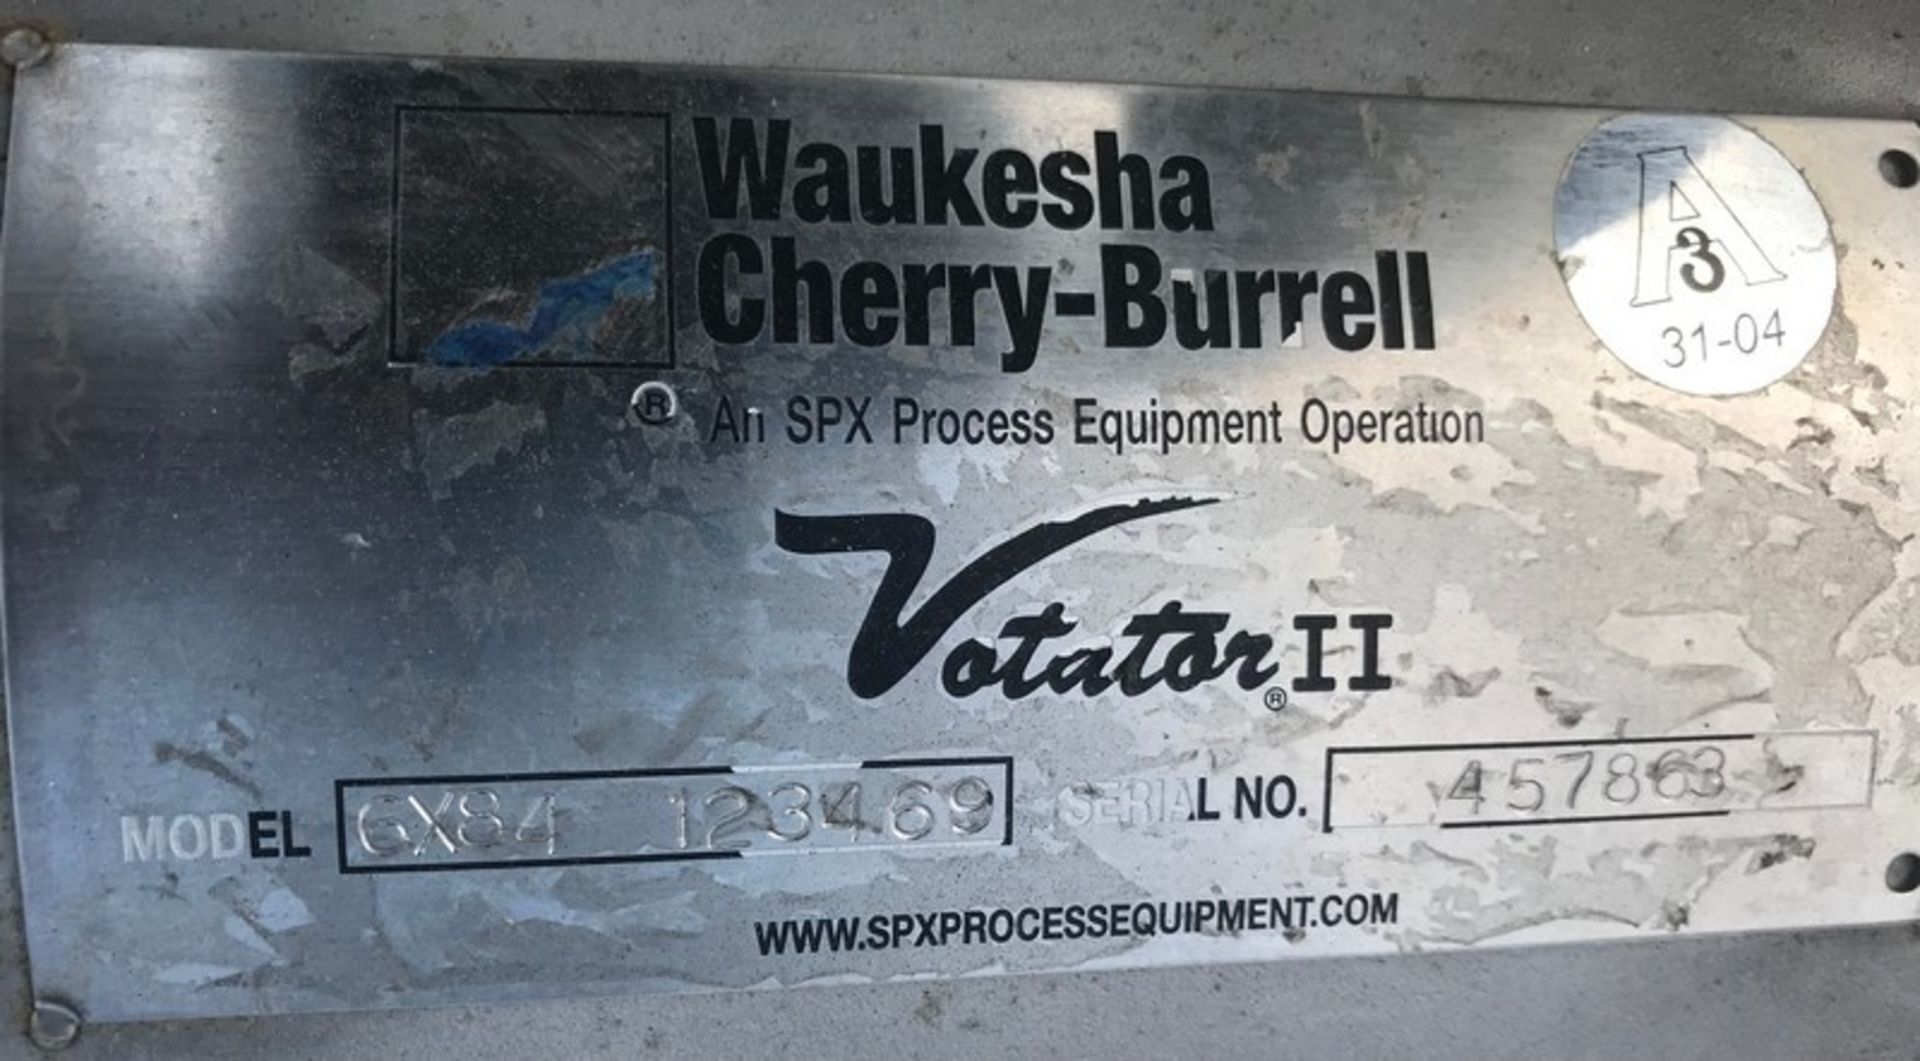 Waukesha Cherry Burrell Aprox. 6" Dia. x 84" L Contherm Votator II Scraped Surface S/S Heat - Image 3 of 3